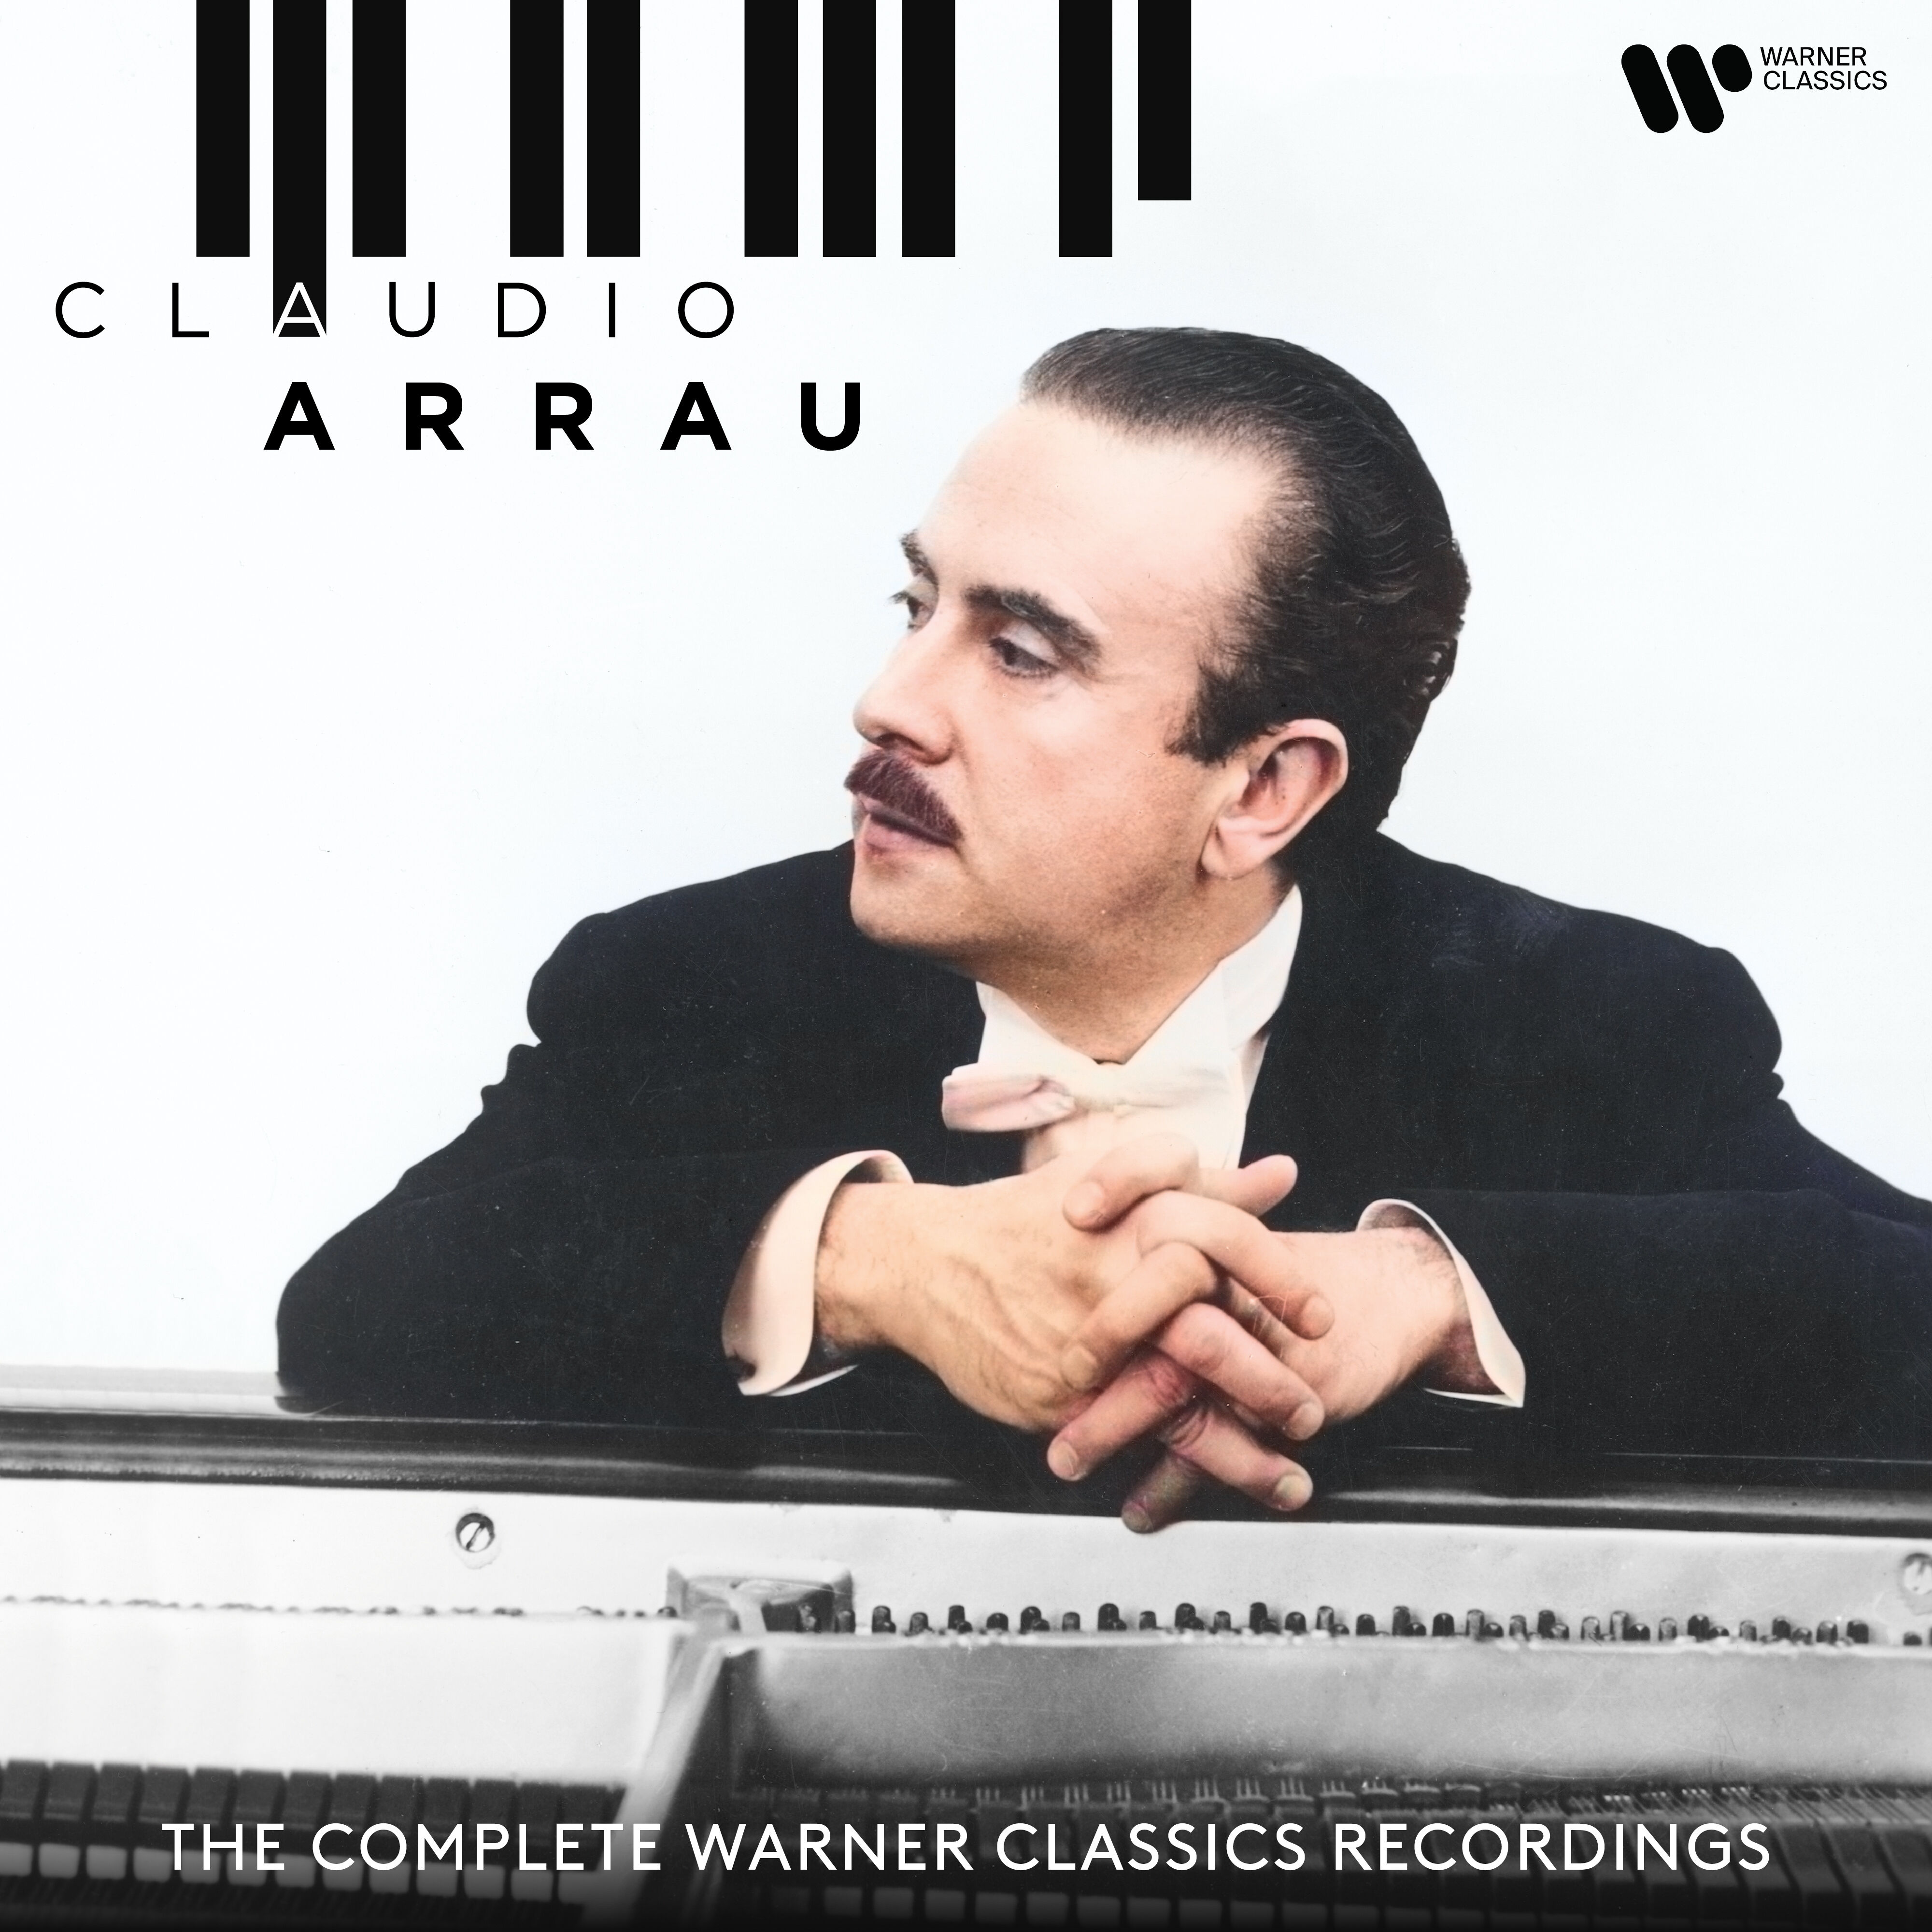 Claudio Arrau - The Complete Warner Classics Recordings - 05 of 10 24b192